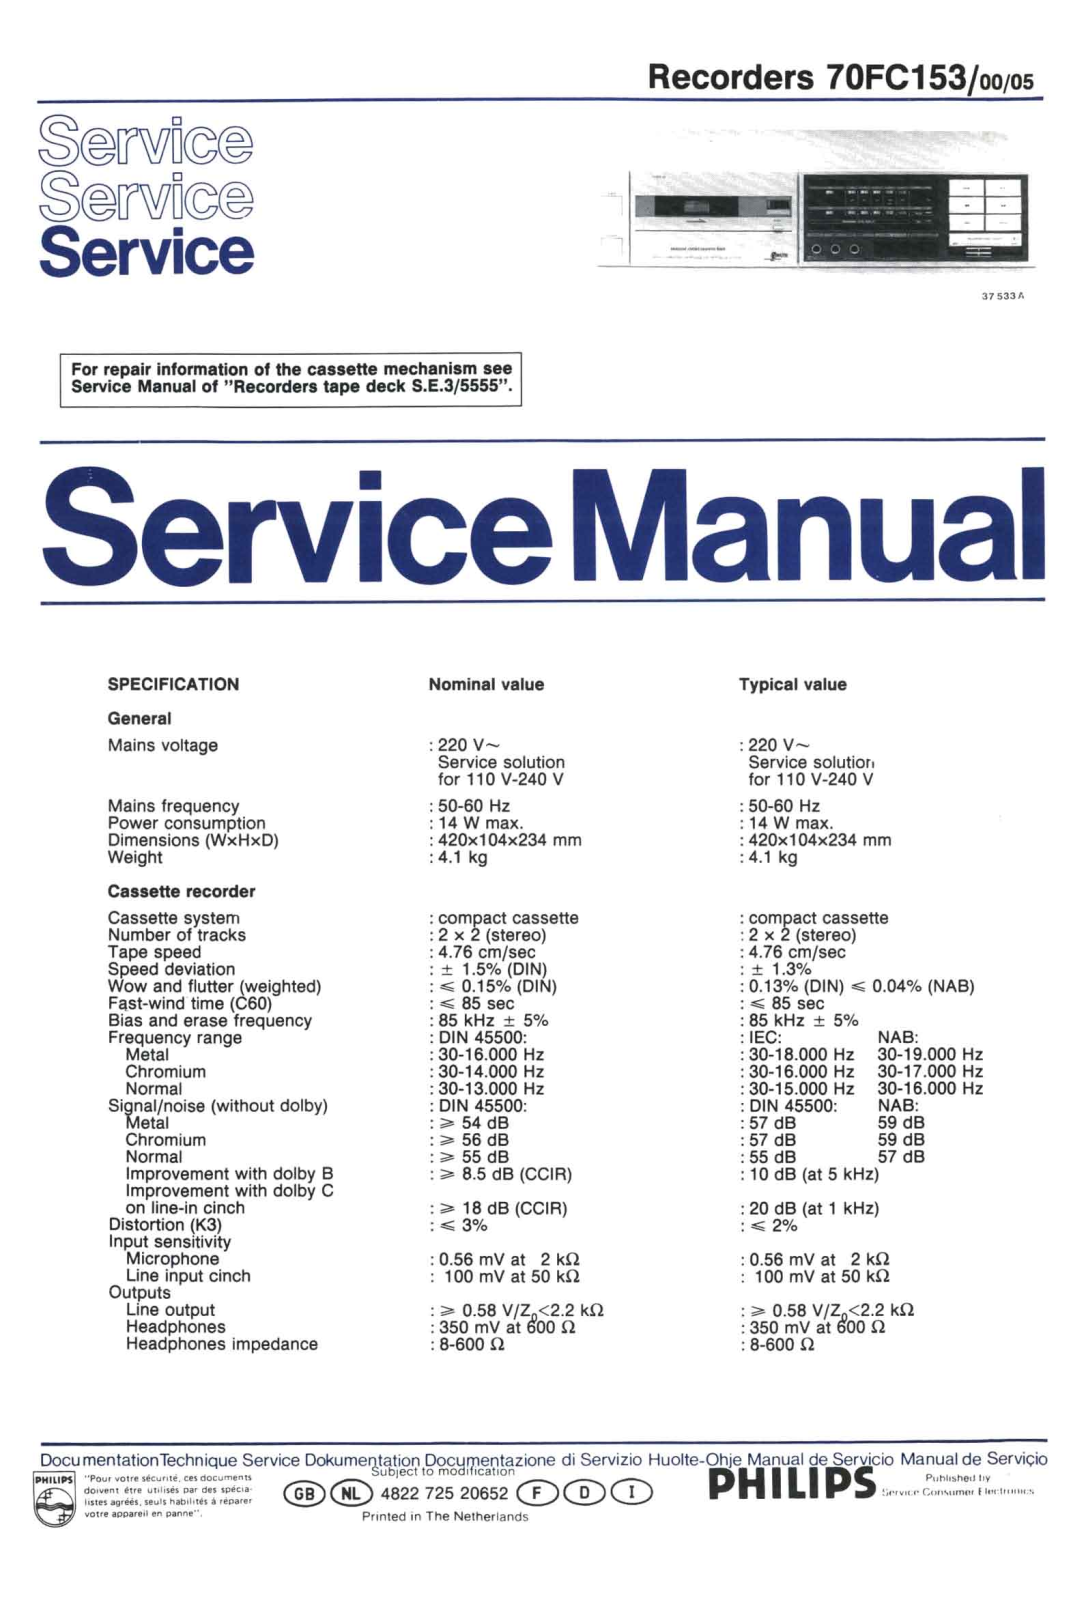 Philips FC-153 Service Manual